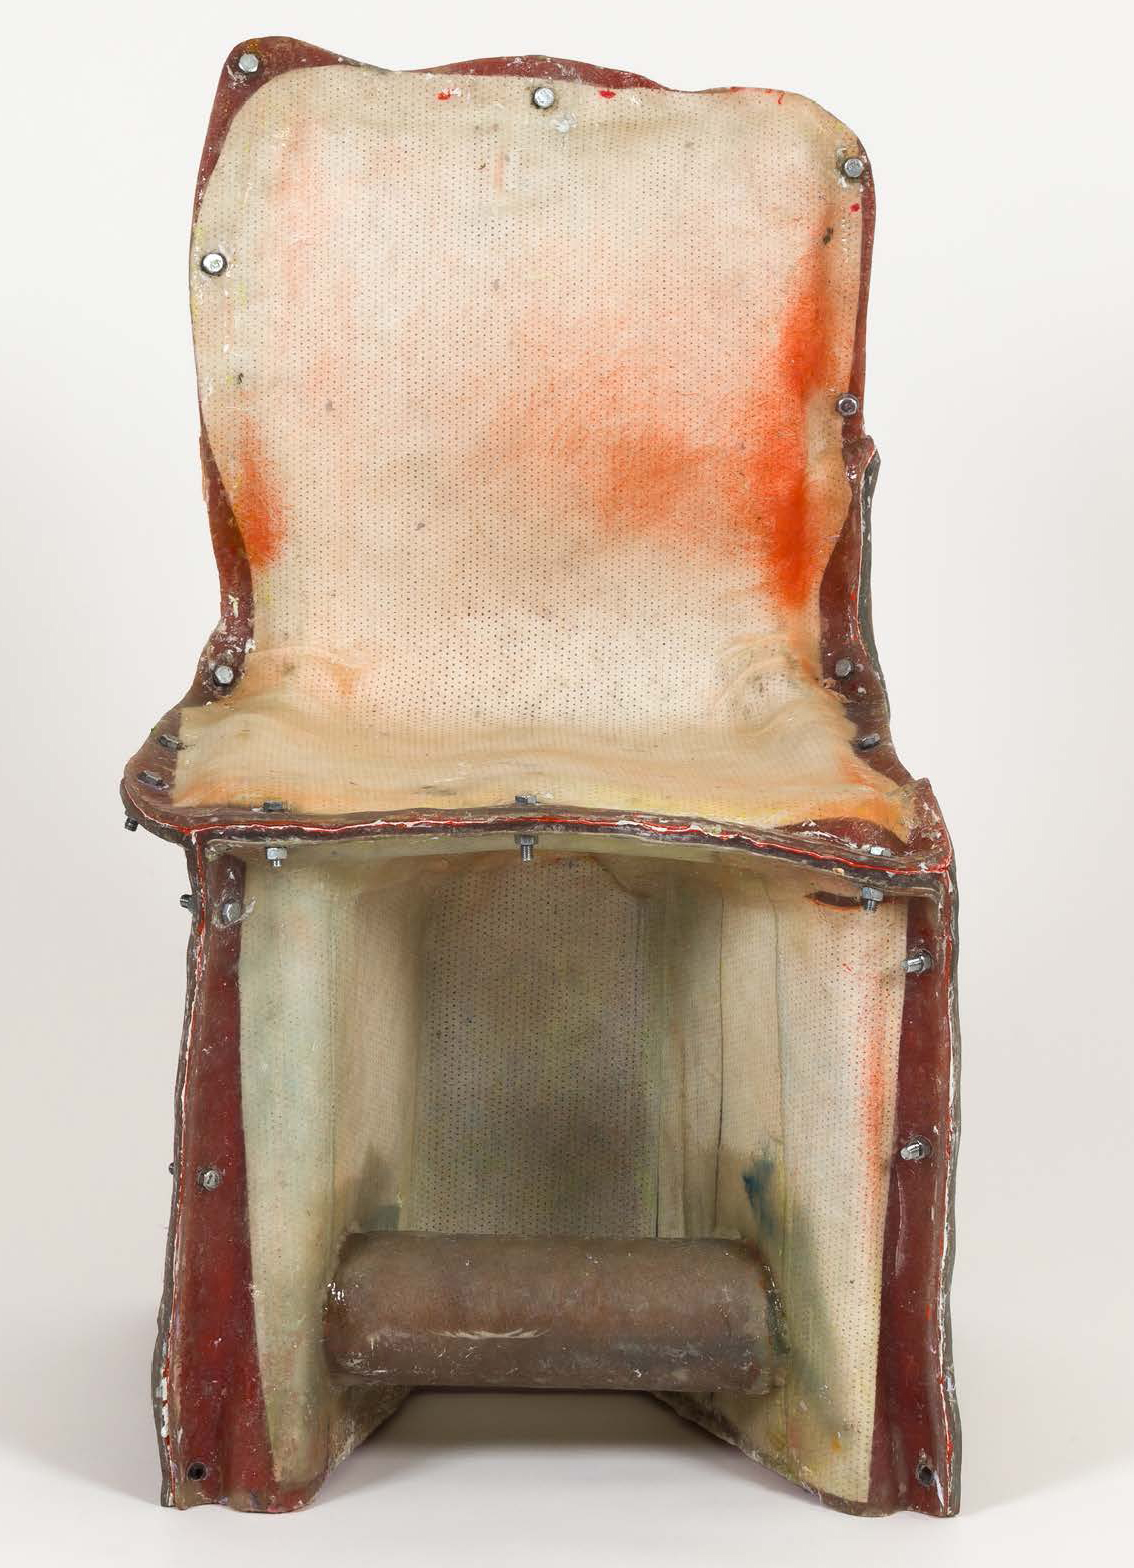 Installation view, Pratt Chair No 87, 1984 and 2018, Salon 94 Design. Image